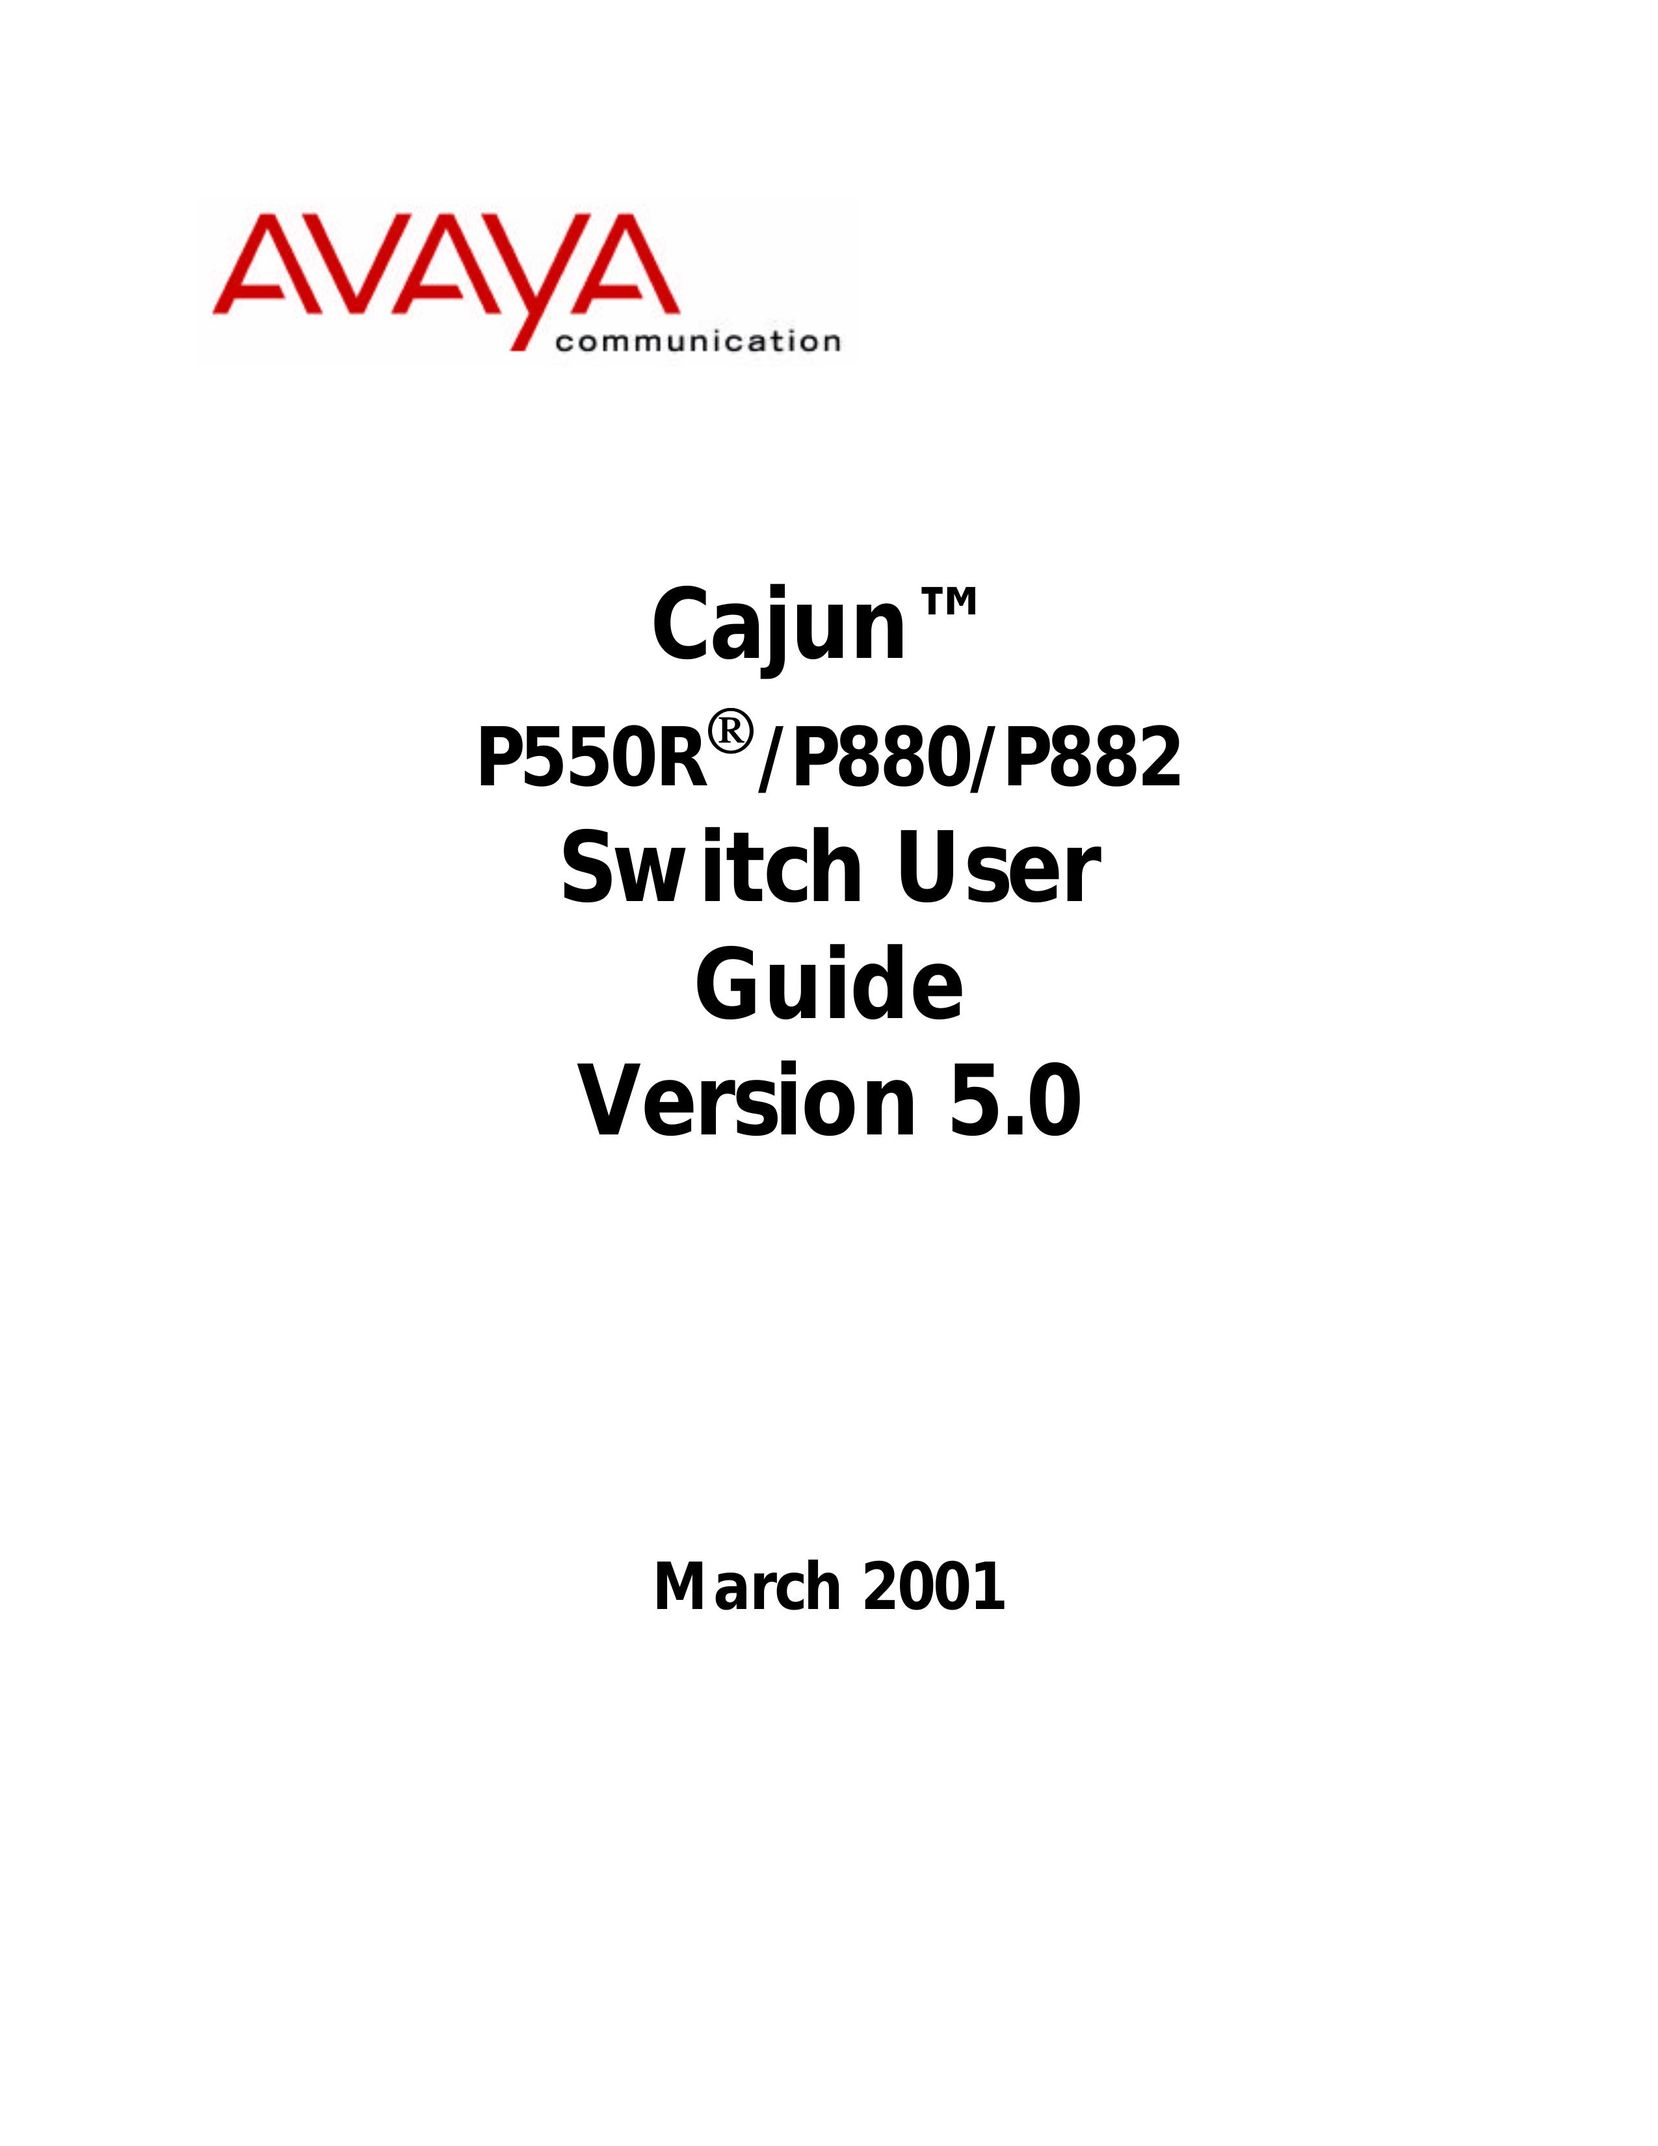 Avaya P880 Switch User Manual